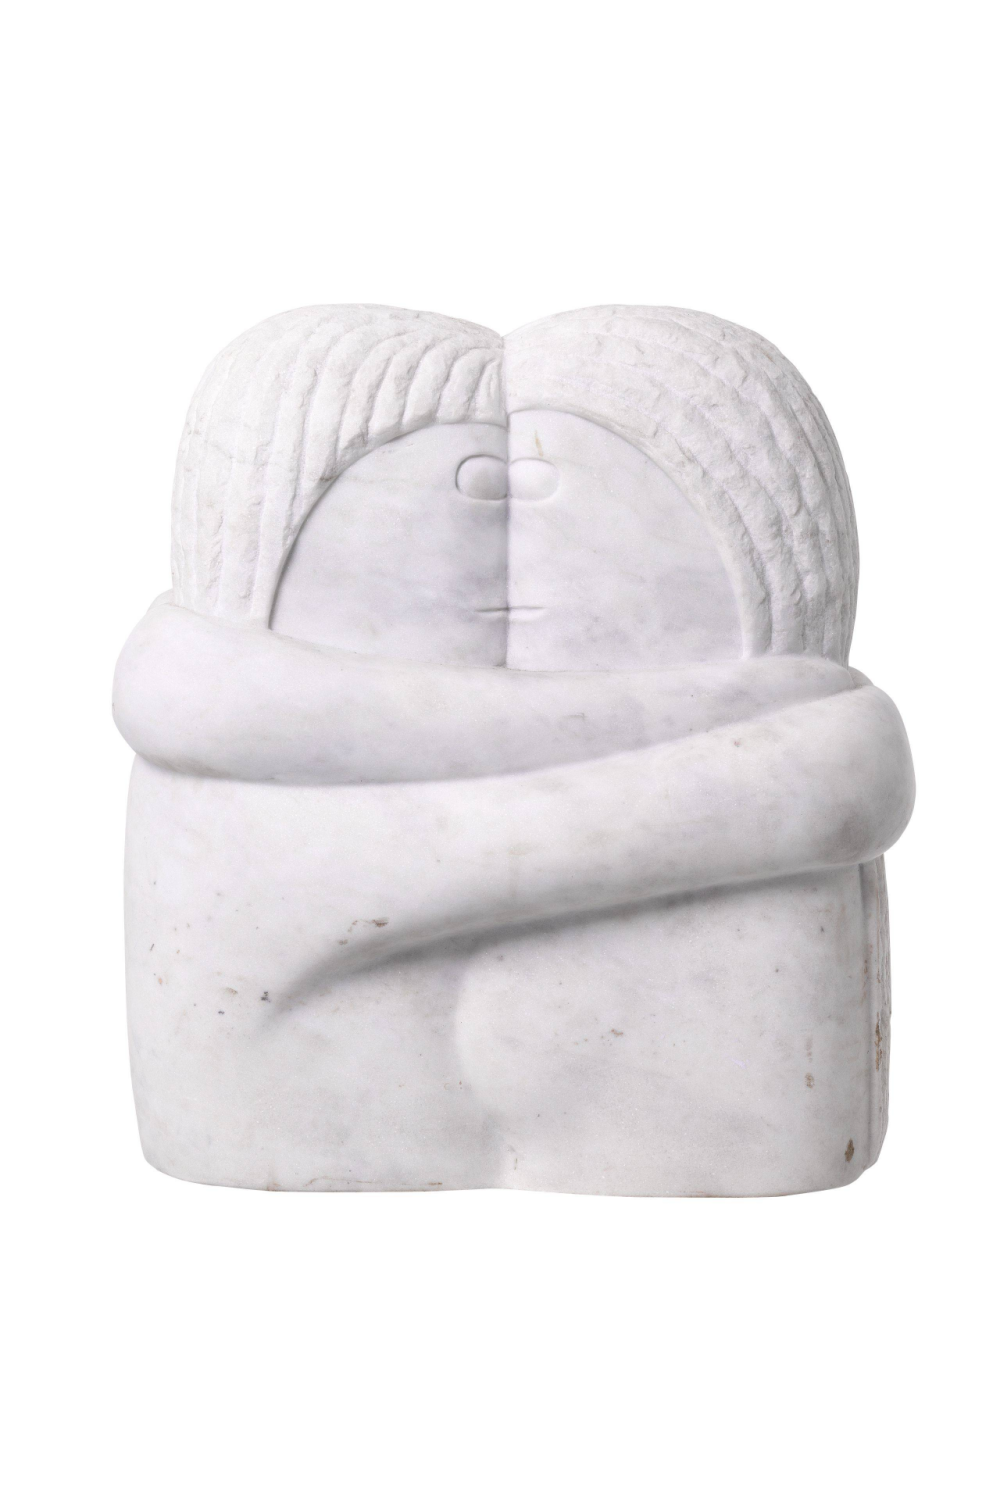 White Marble Statue | Eichholtz Object Love Couple | OROA